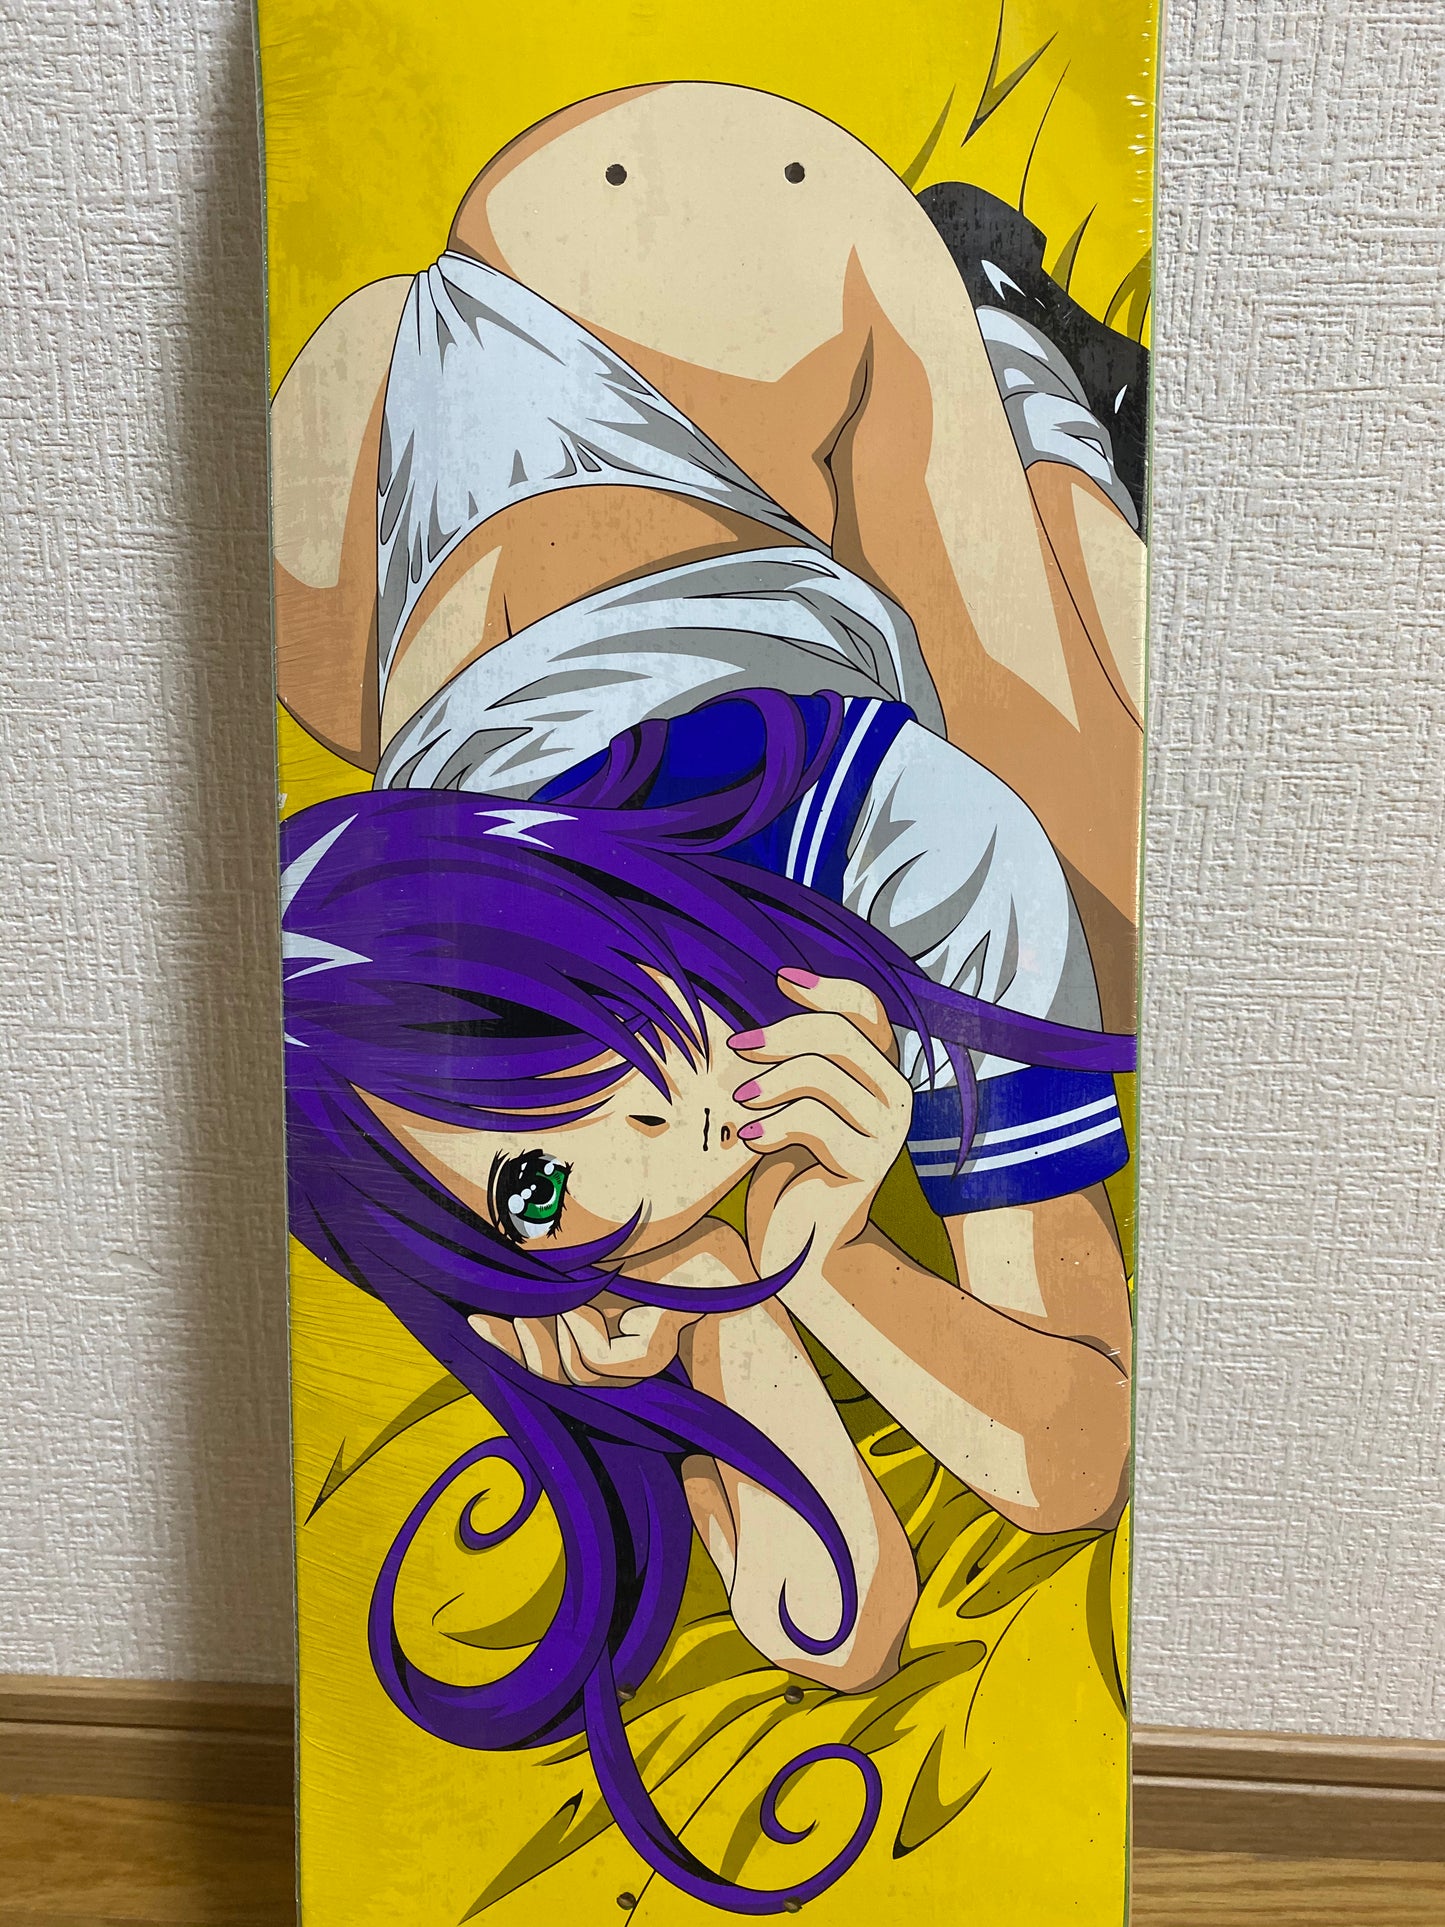 Hook Ups Japanese School Girl Henta Evangelion Nude Aska Ayanami Rei Erotica Erotic Skateboard Deck Set